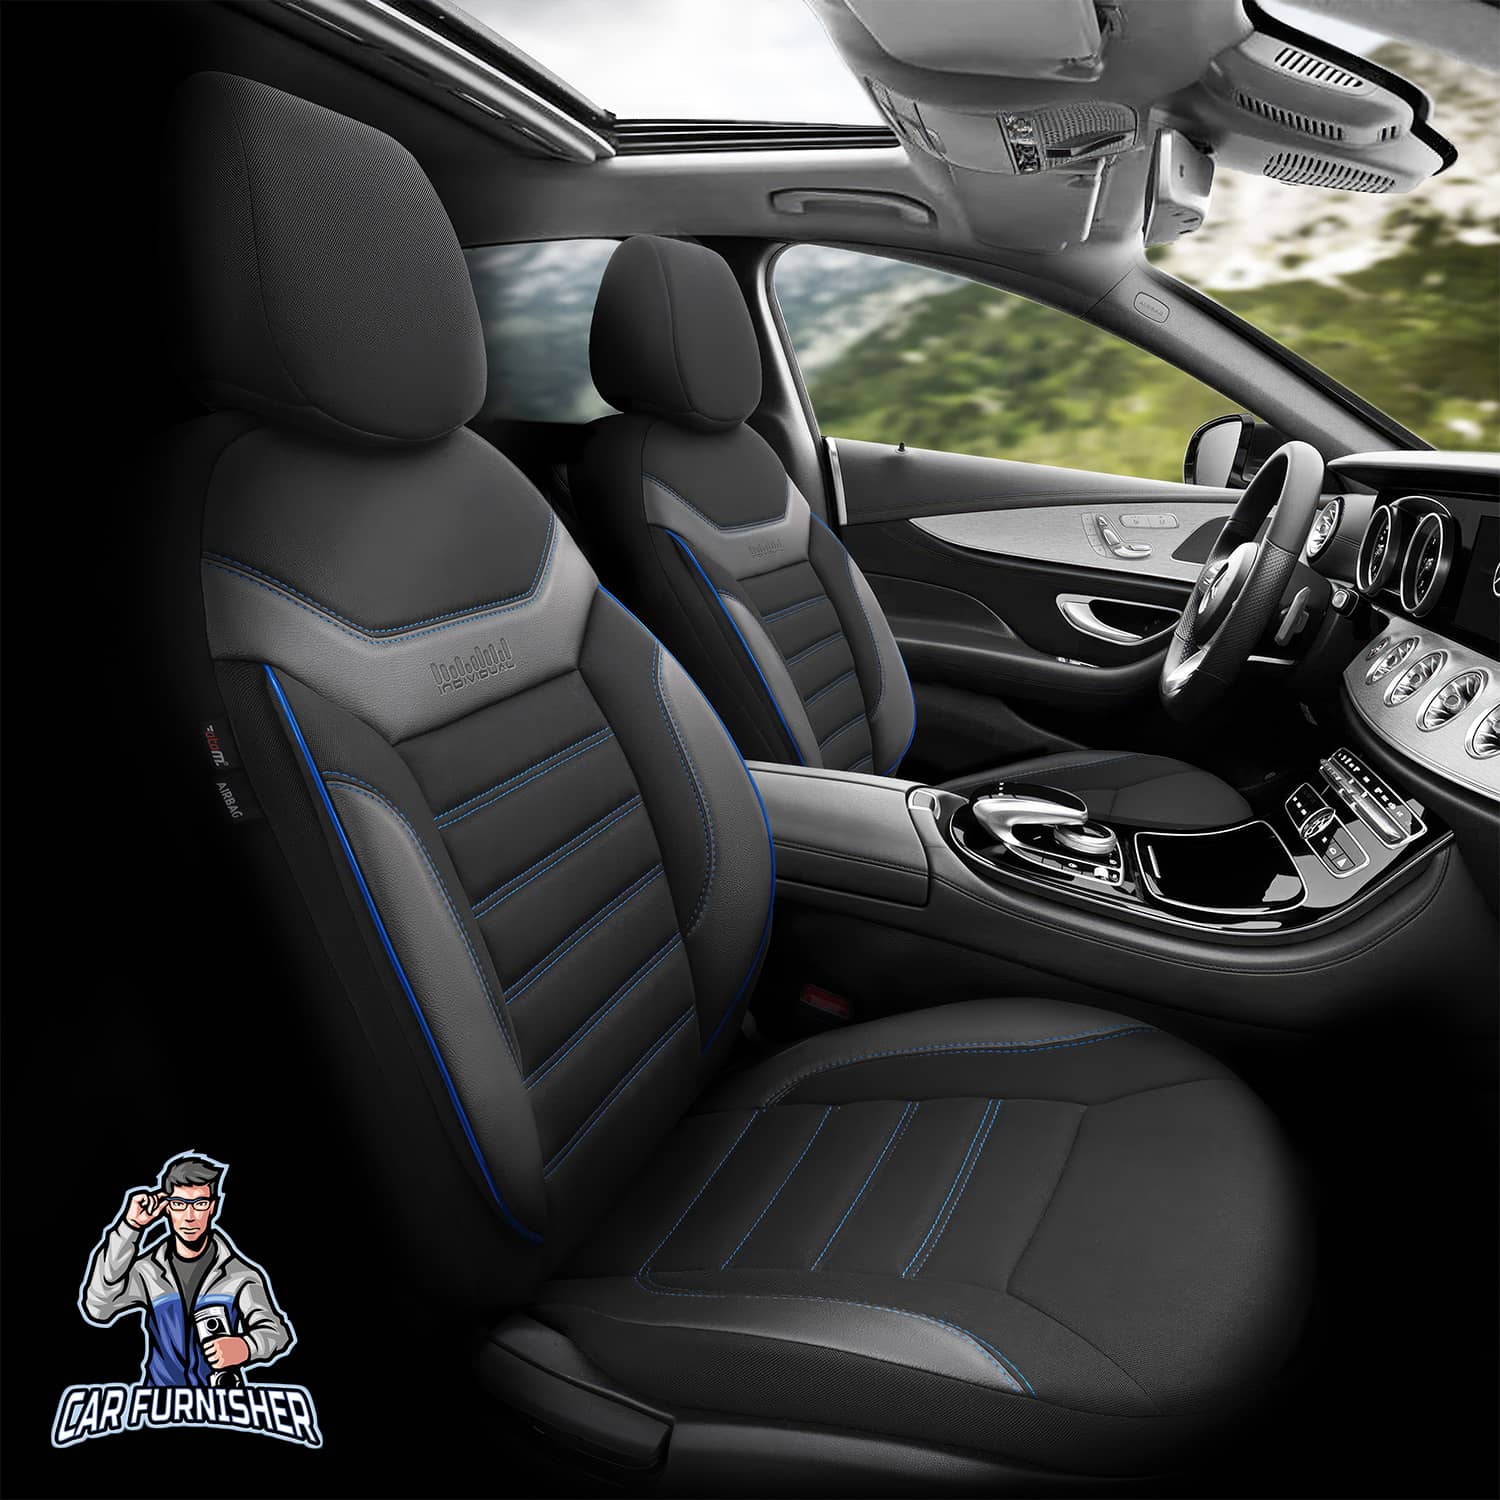 Protect Your Passat: Leather Volkswagen Passat Car Seat Covers Tips